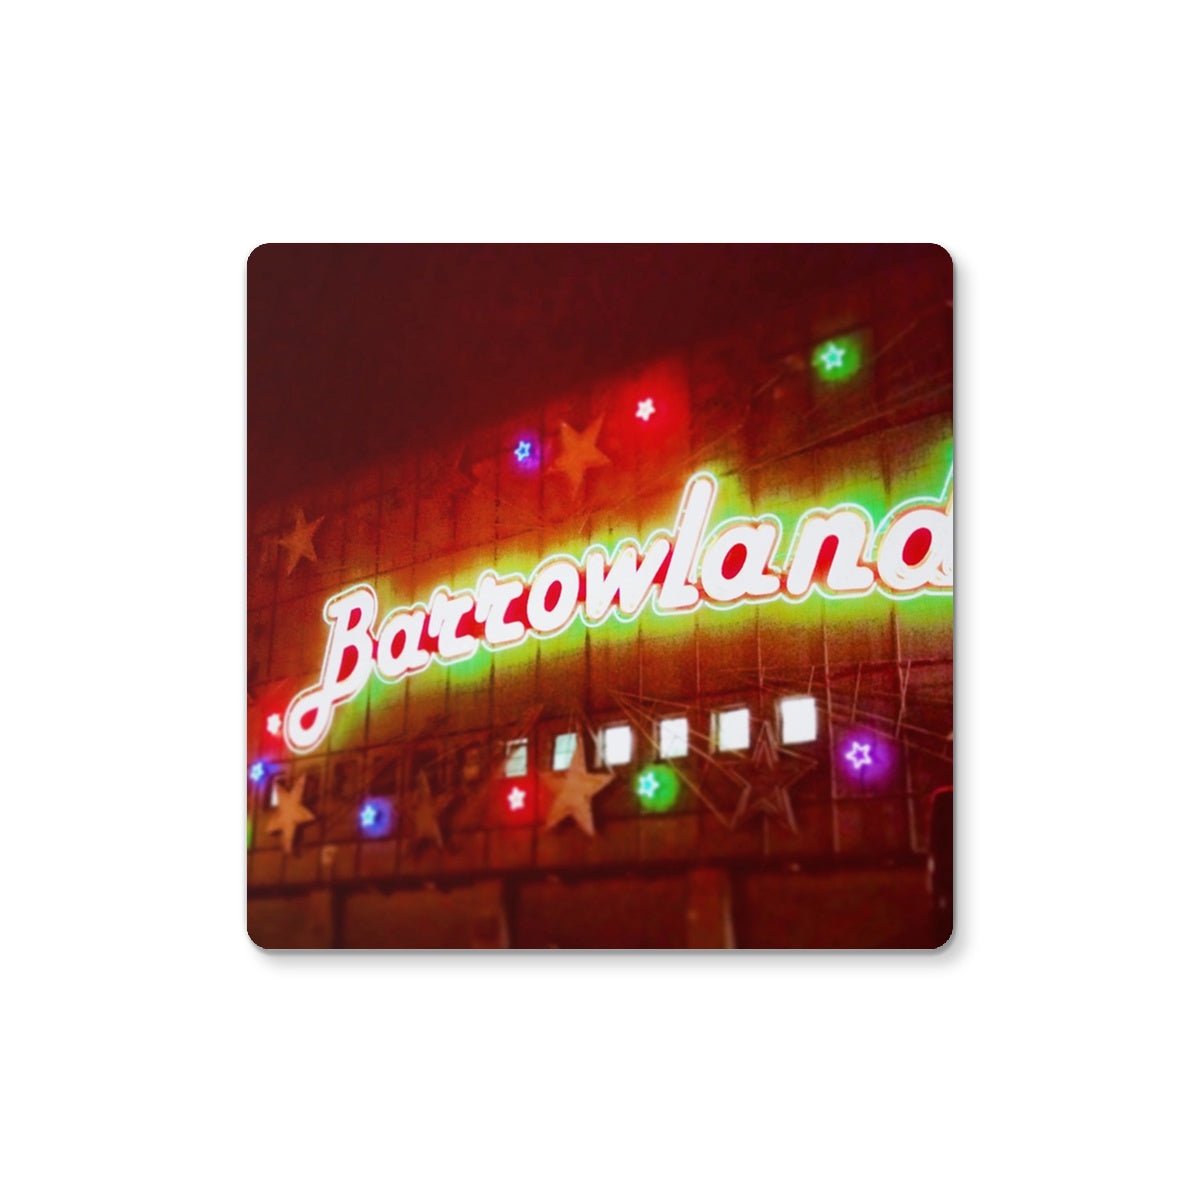 A Neon Glasgow Barrowlands Art Gifts Coaster-Coasters-Edinburgh & Glasgow Art Gallery-Single Coaster-Paintings, Prints, Homeware, Art Gifts From Scotland By Scottish Artist Kevin Hunter